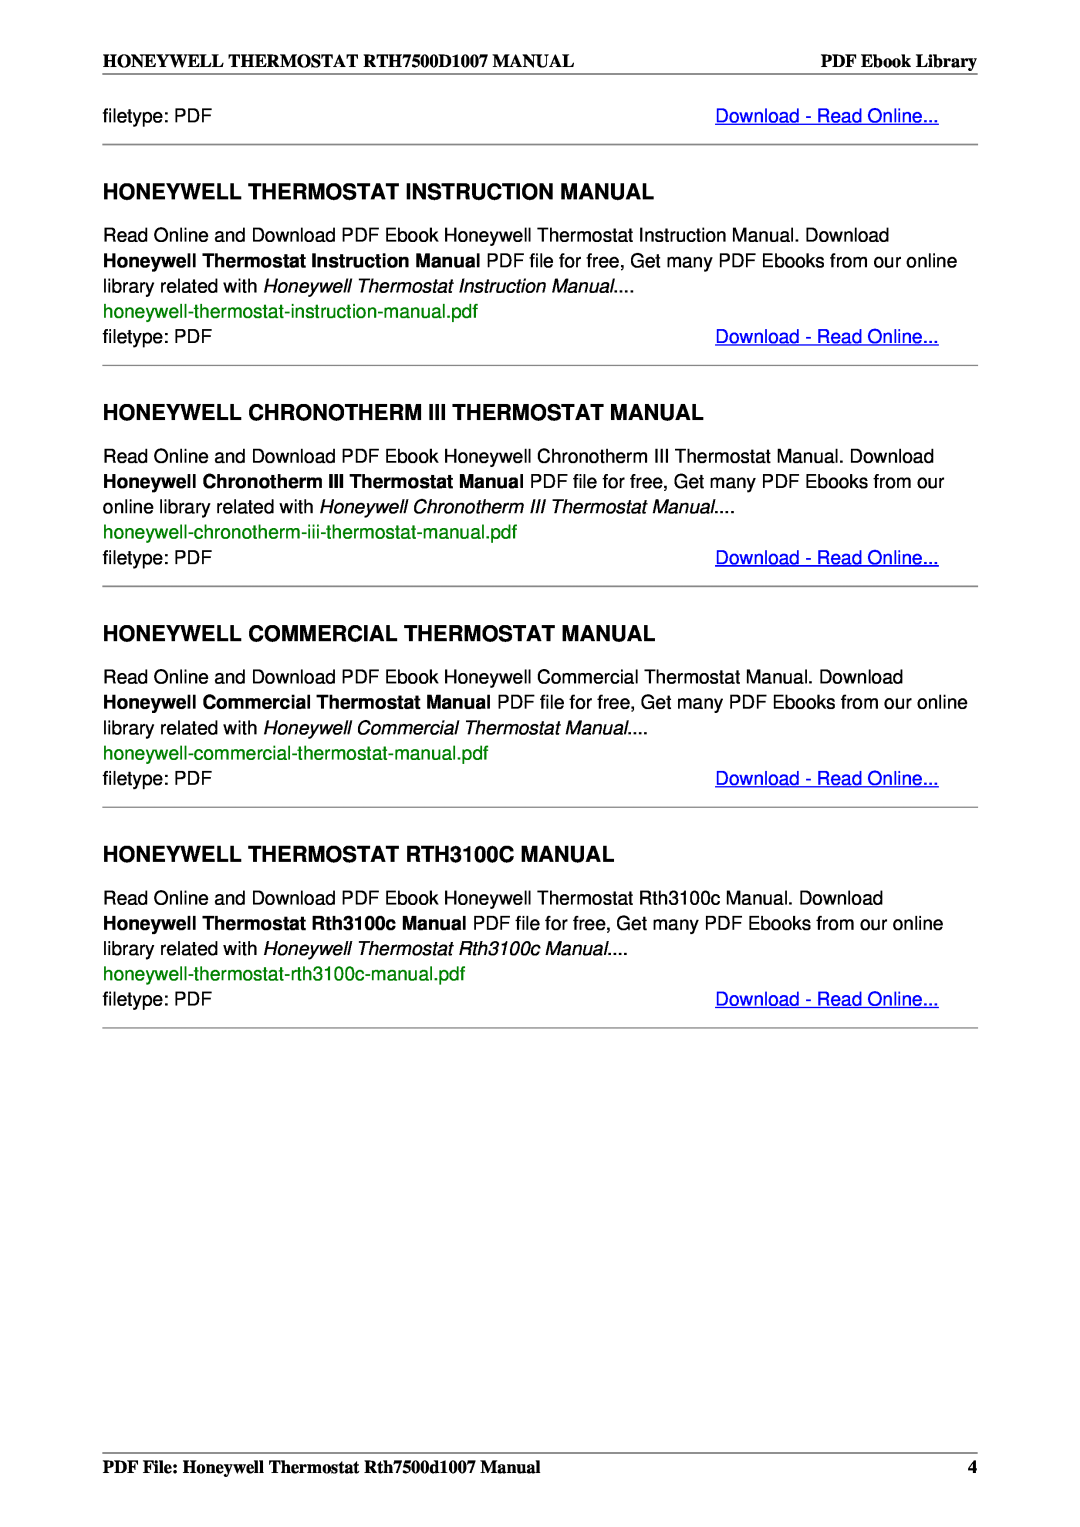 Honeywell RTH7500D1007 Honeywell Thermostat Instruction Manual, Honeywell Chronotherm Iii Thermostat Manual, filetype PDF 